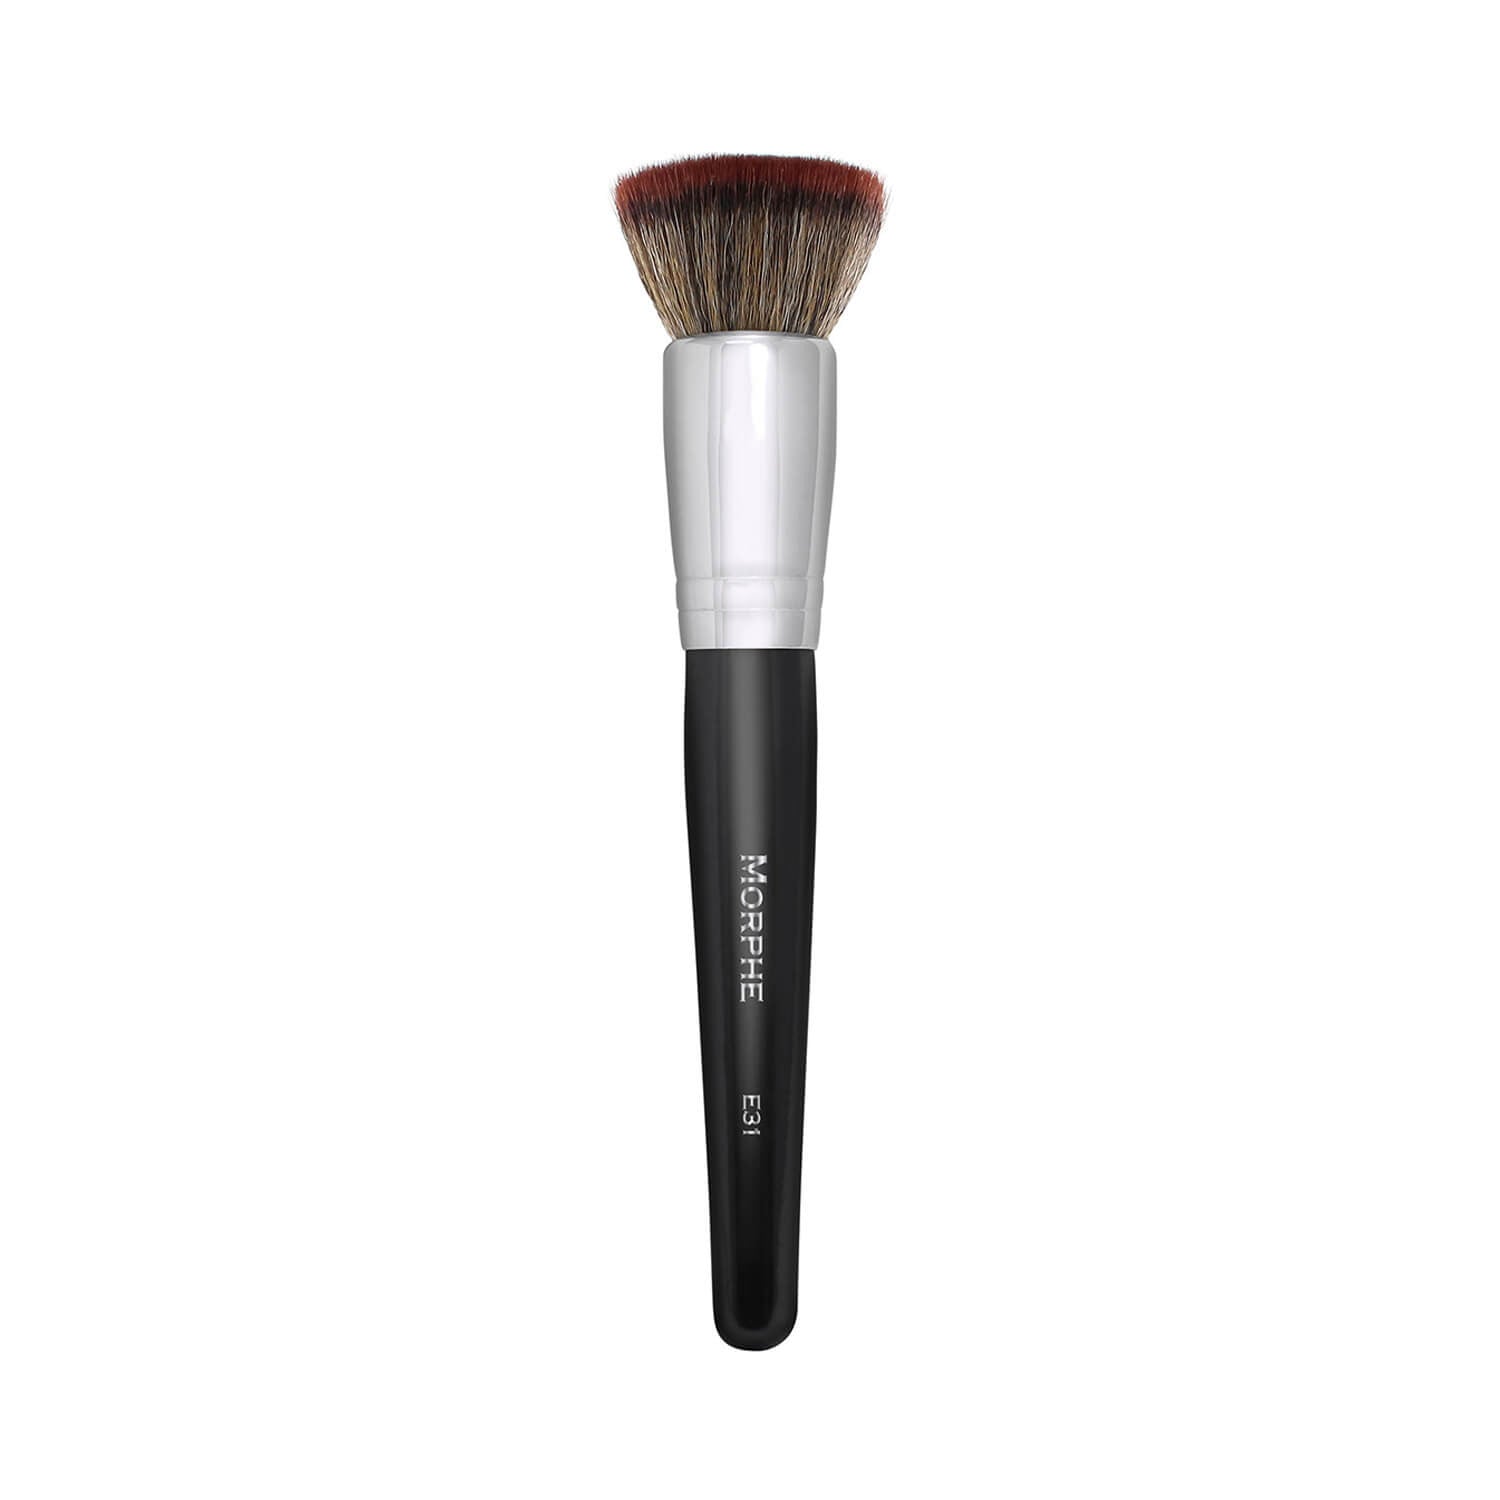 Morphe Cosmetics E31 Deluxe Flat Buffer Brush